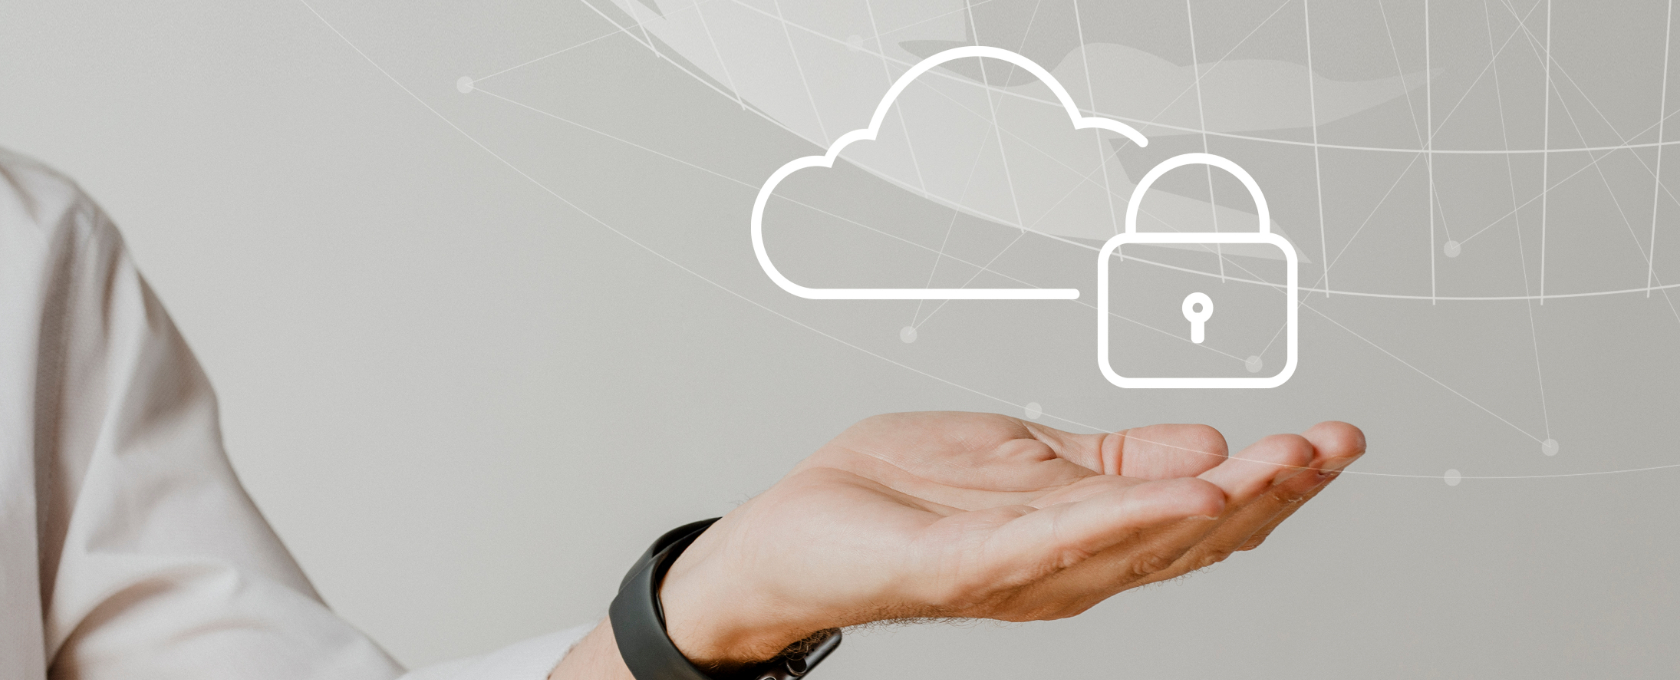 Cloud Analytics is the New Enterprise IT Model